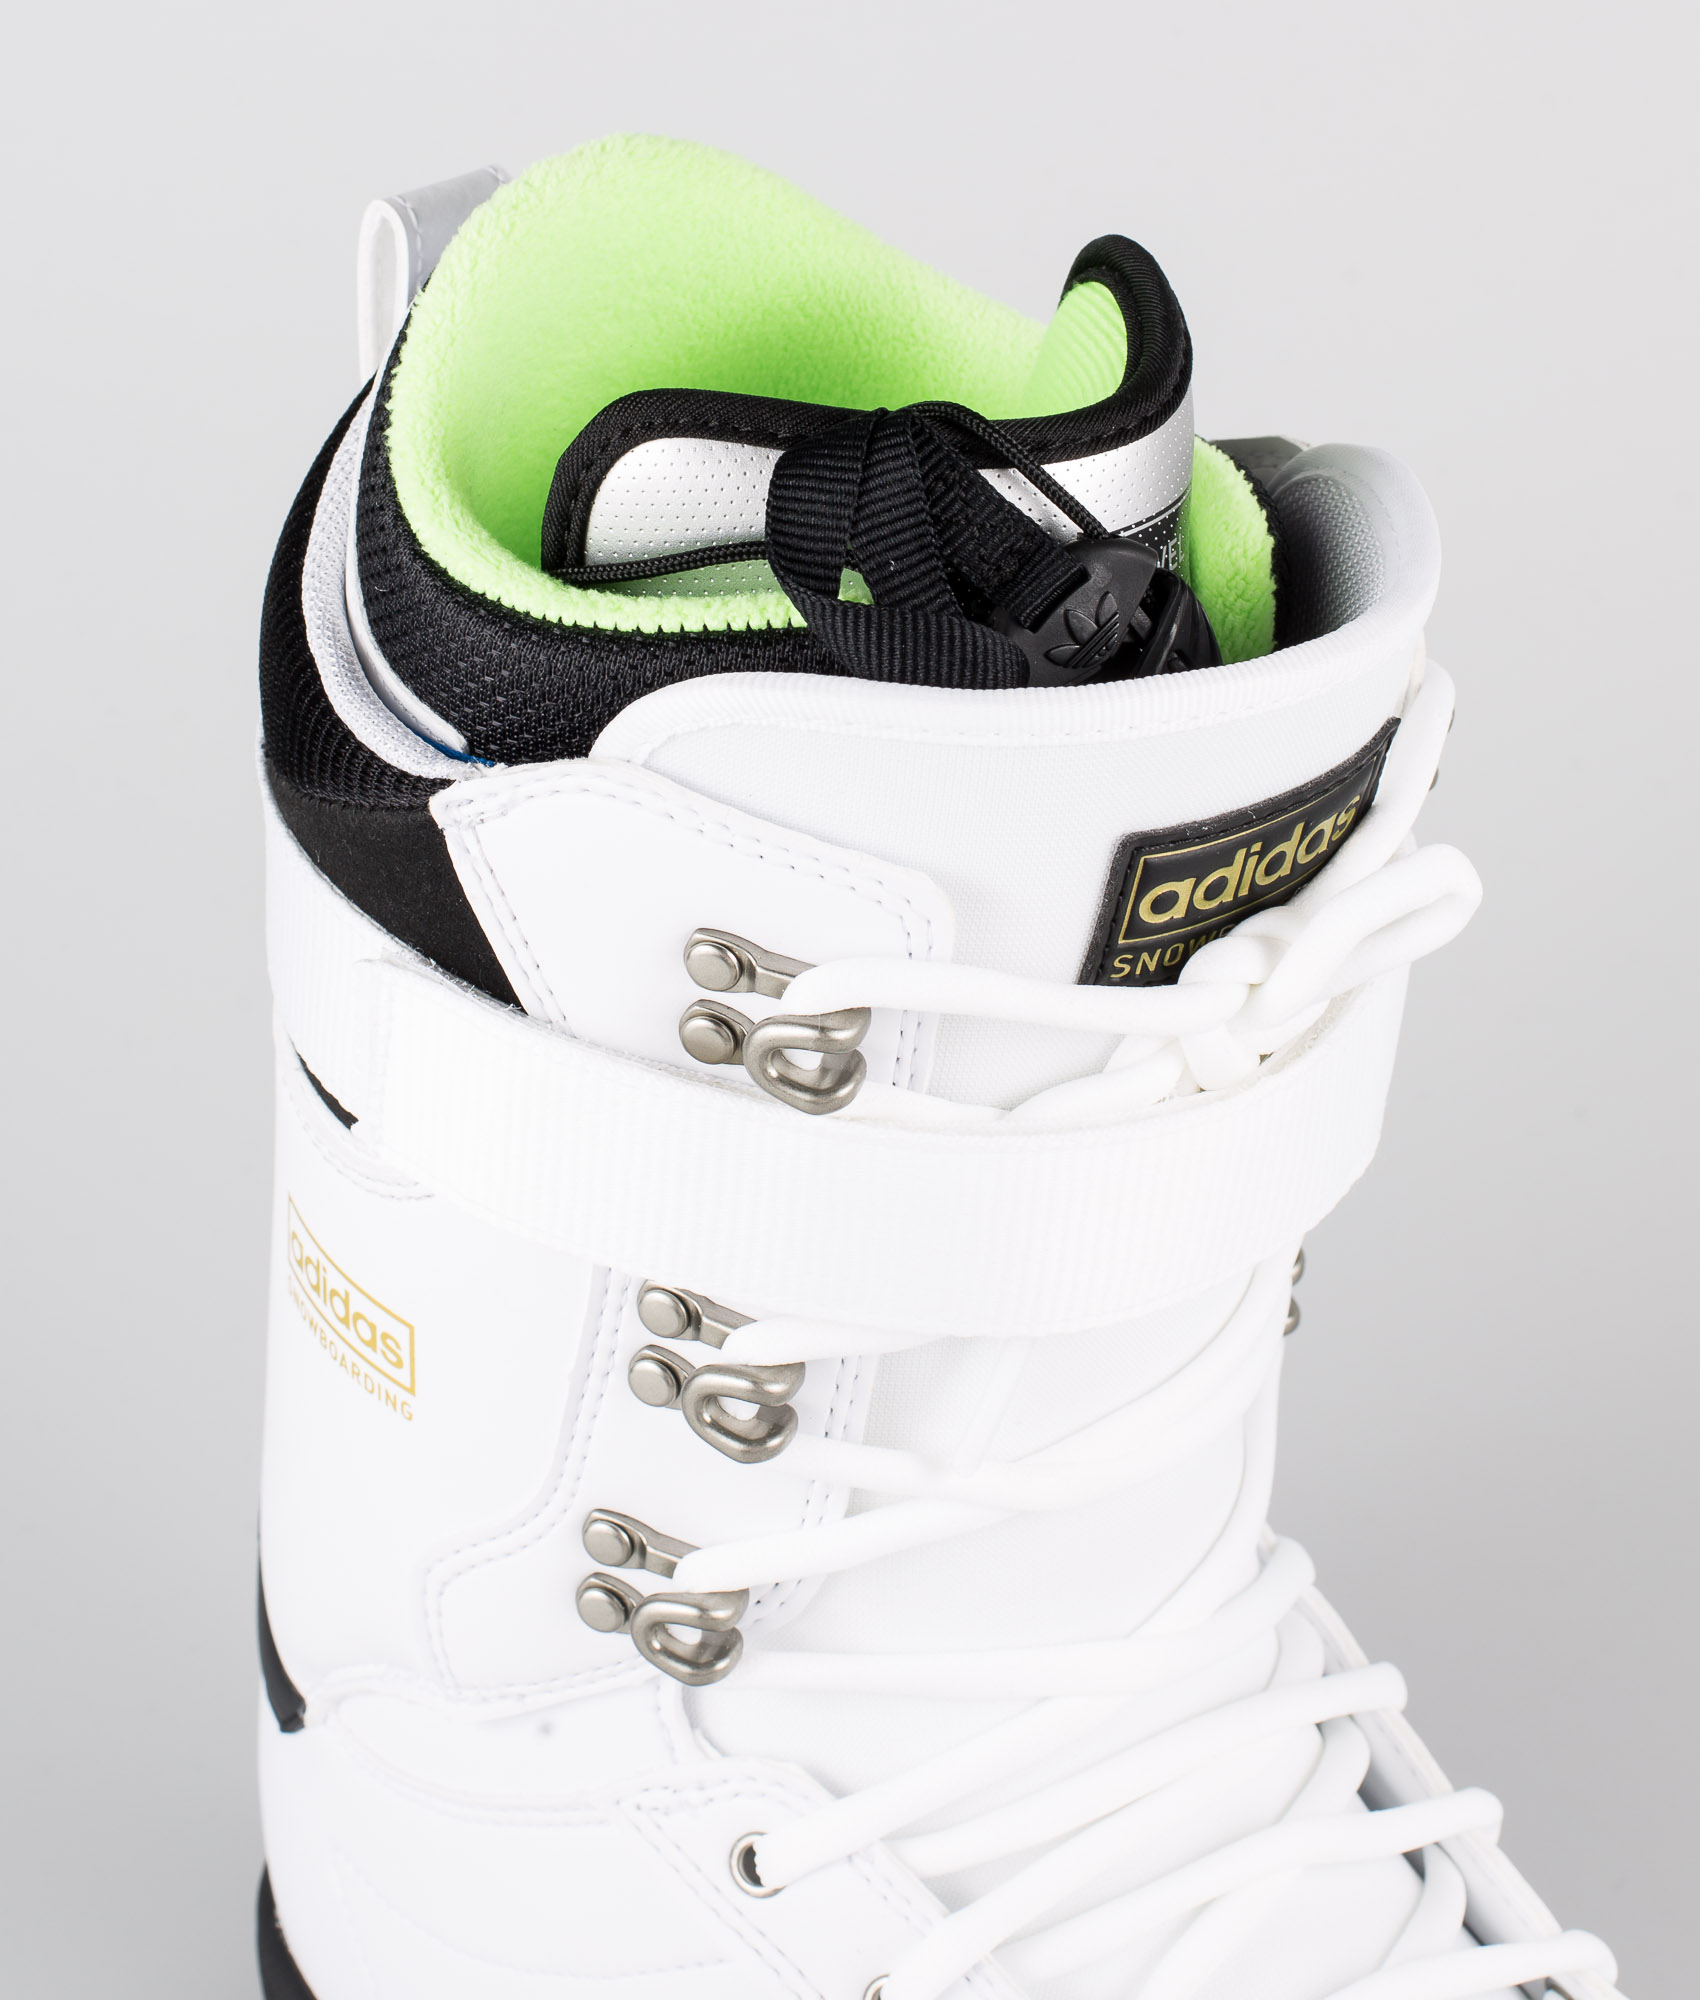 adidas superstar snowboard boots